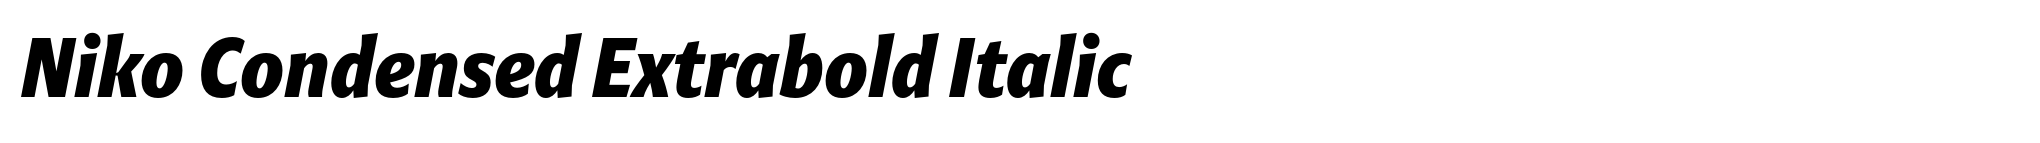 Niko Condensed Extrabold Italic image